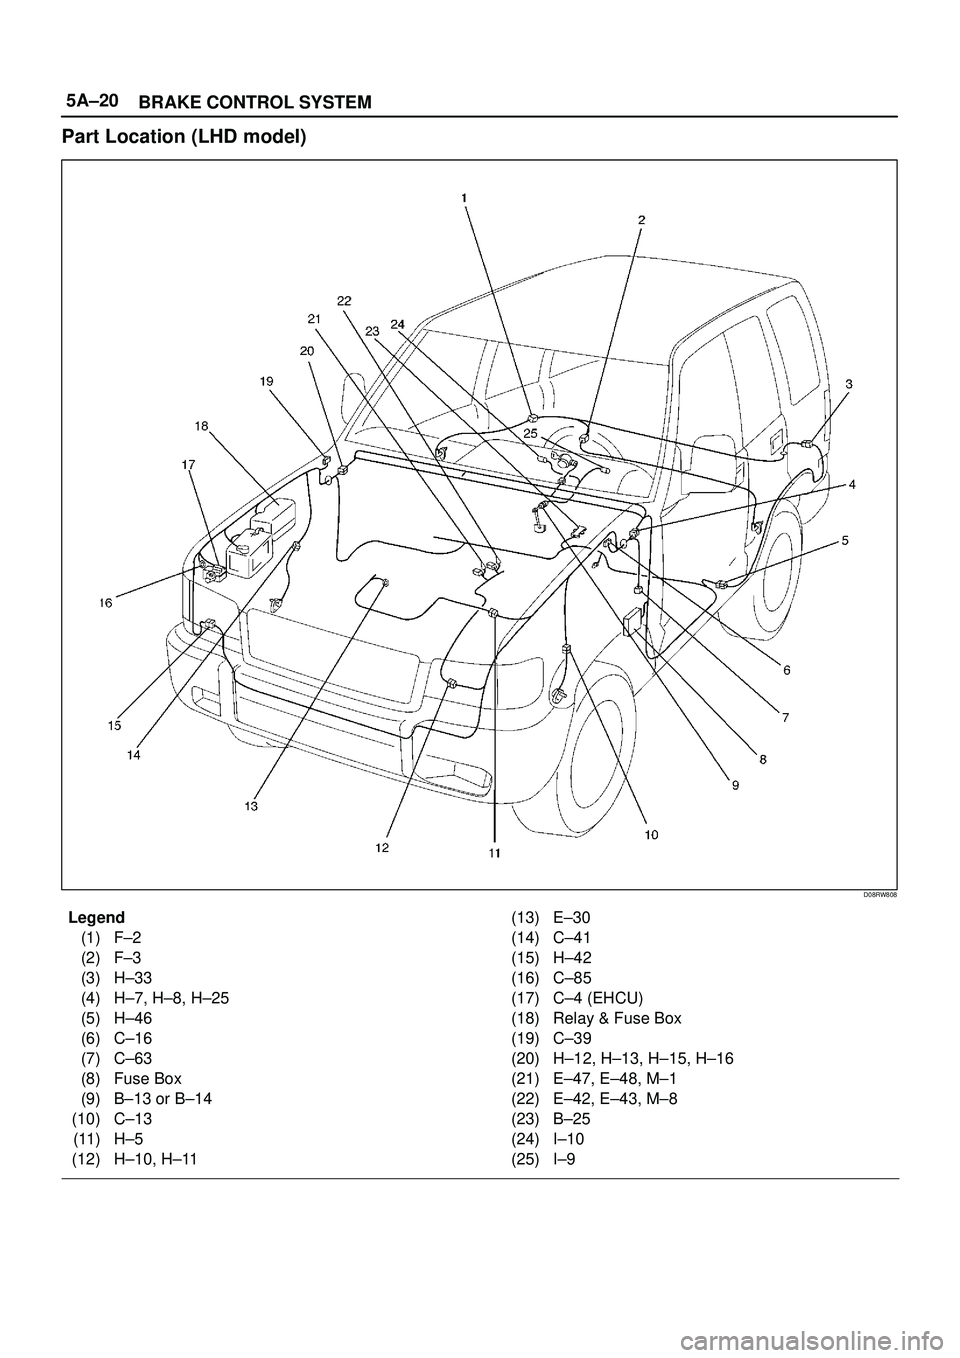 ISUZU TROOPER 1998  Service Repair Manual 5A±20
BRAKE CONTROL SYSTEM
Part Location (LHD model)
D08RW808
Legend
(1) F±2
(2) F±3
(3) H±33
(4) H±7, H±8, H±25
(5) H±46
(6) C±16
(7) C±63
(8) Fuse Box
(9) B±13 or B±14
(10) C±13
(11) H�